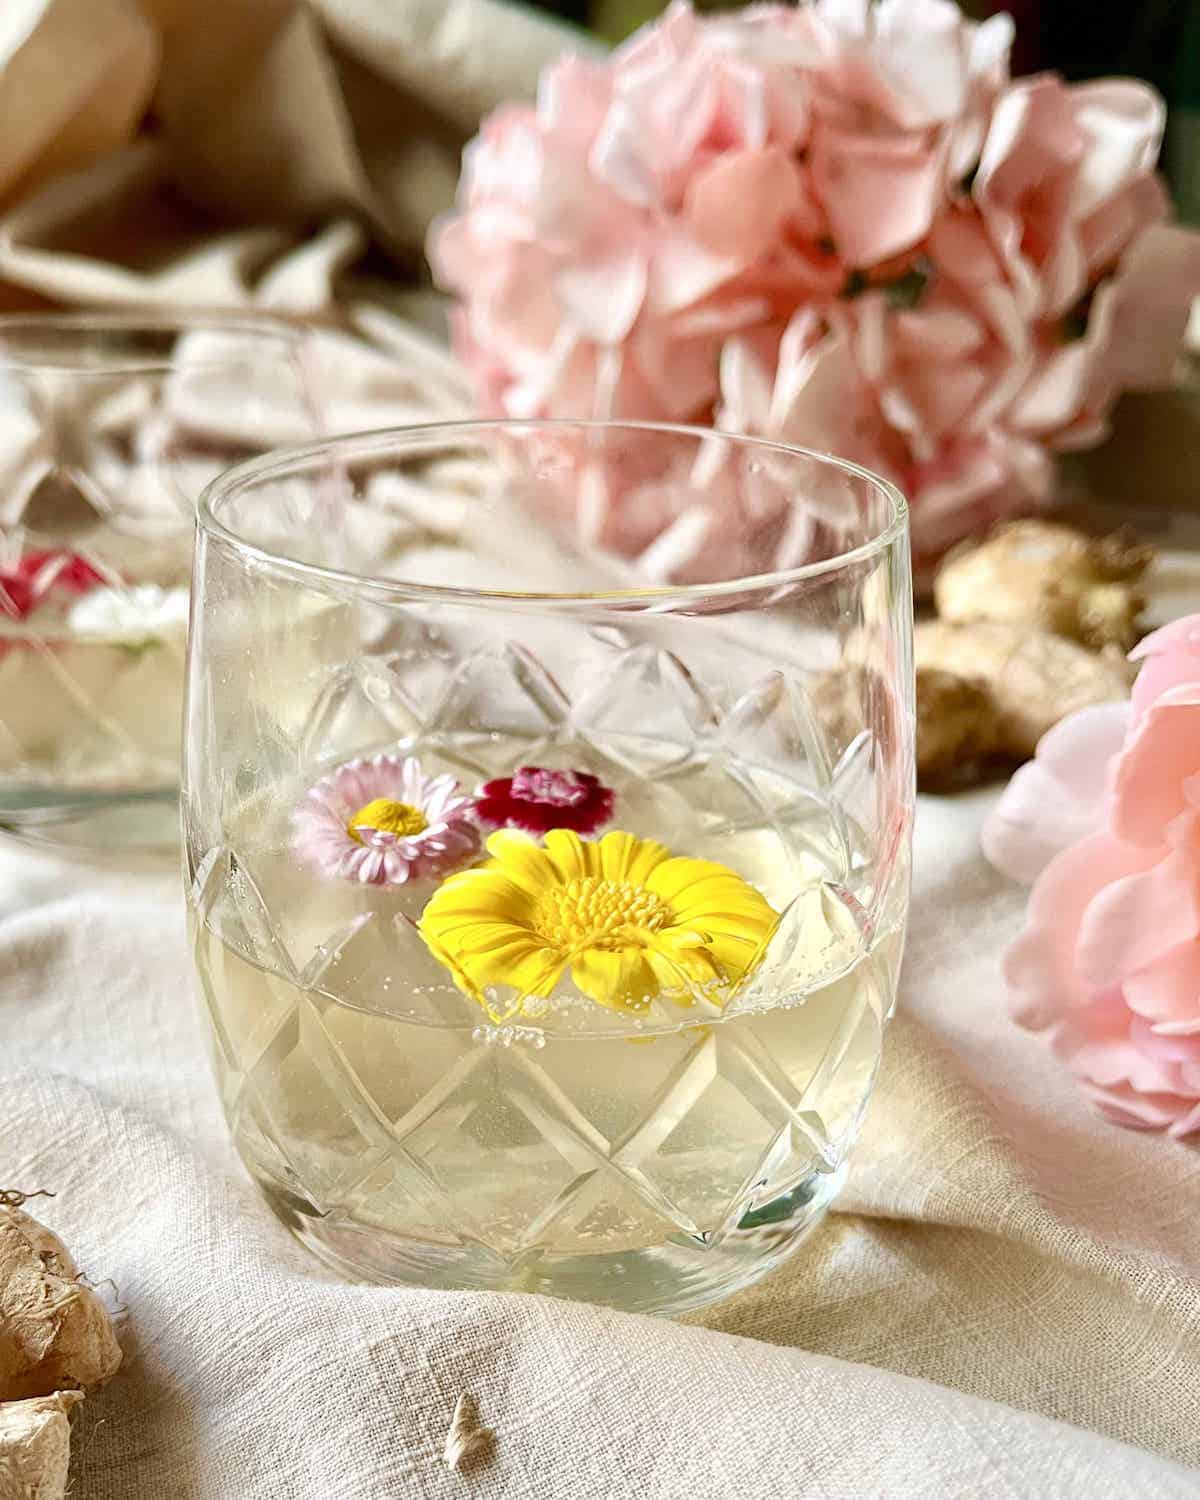 2 glasses of lemongrass tisane with edible flowers in them.